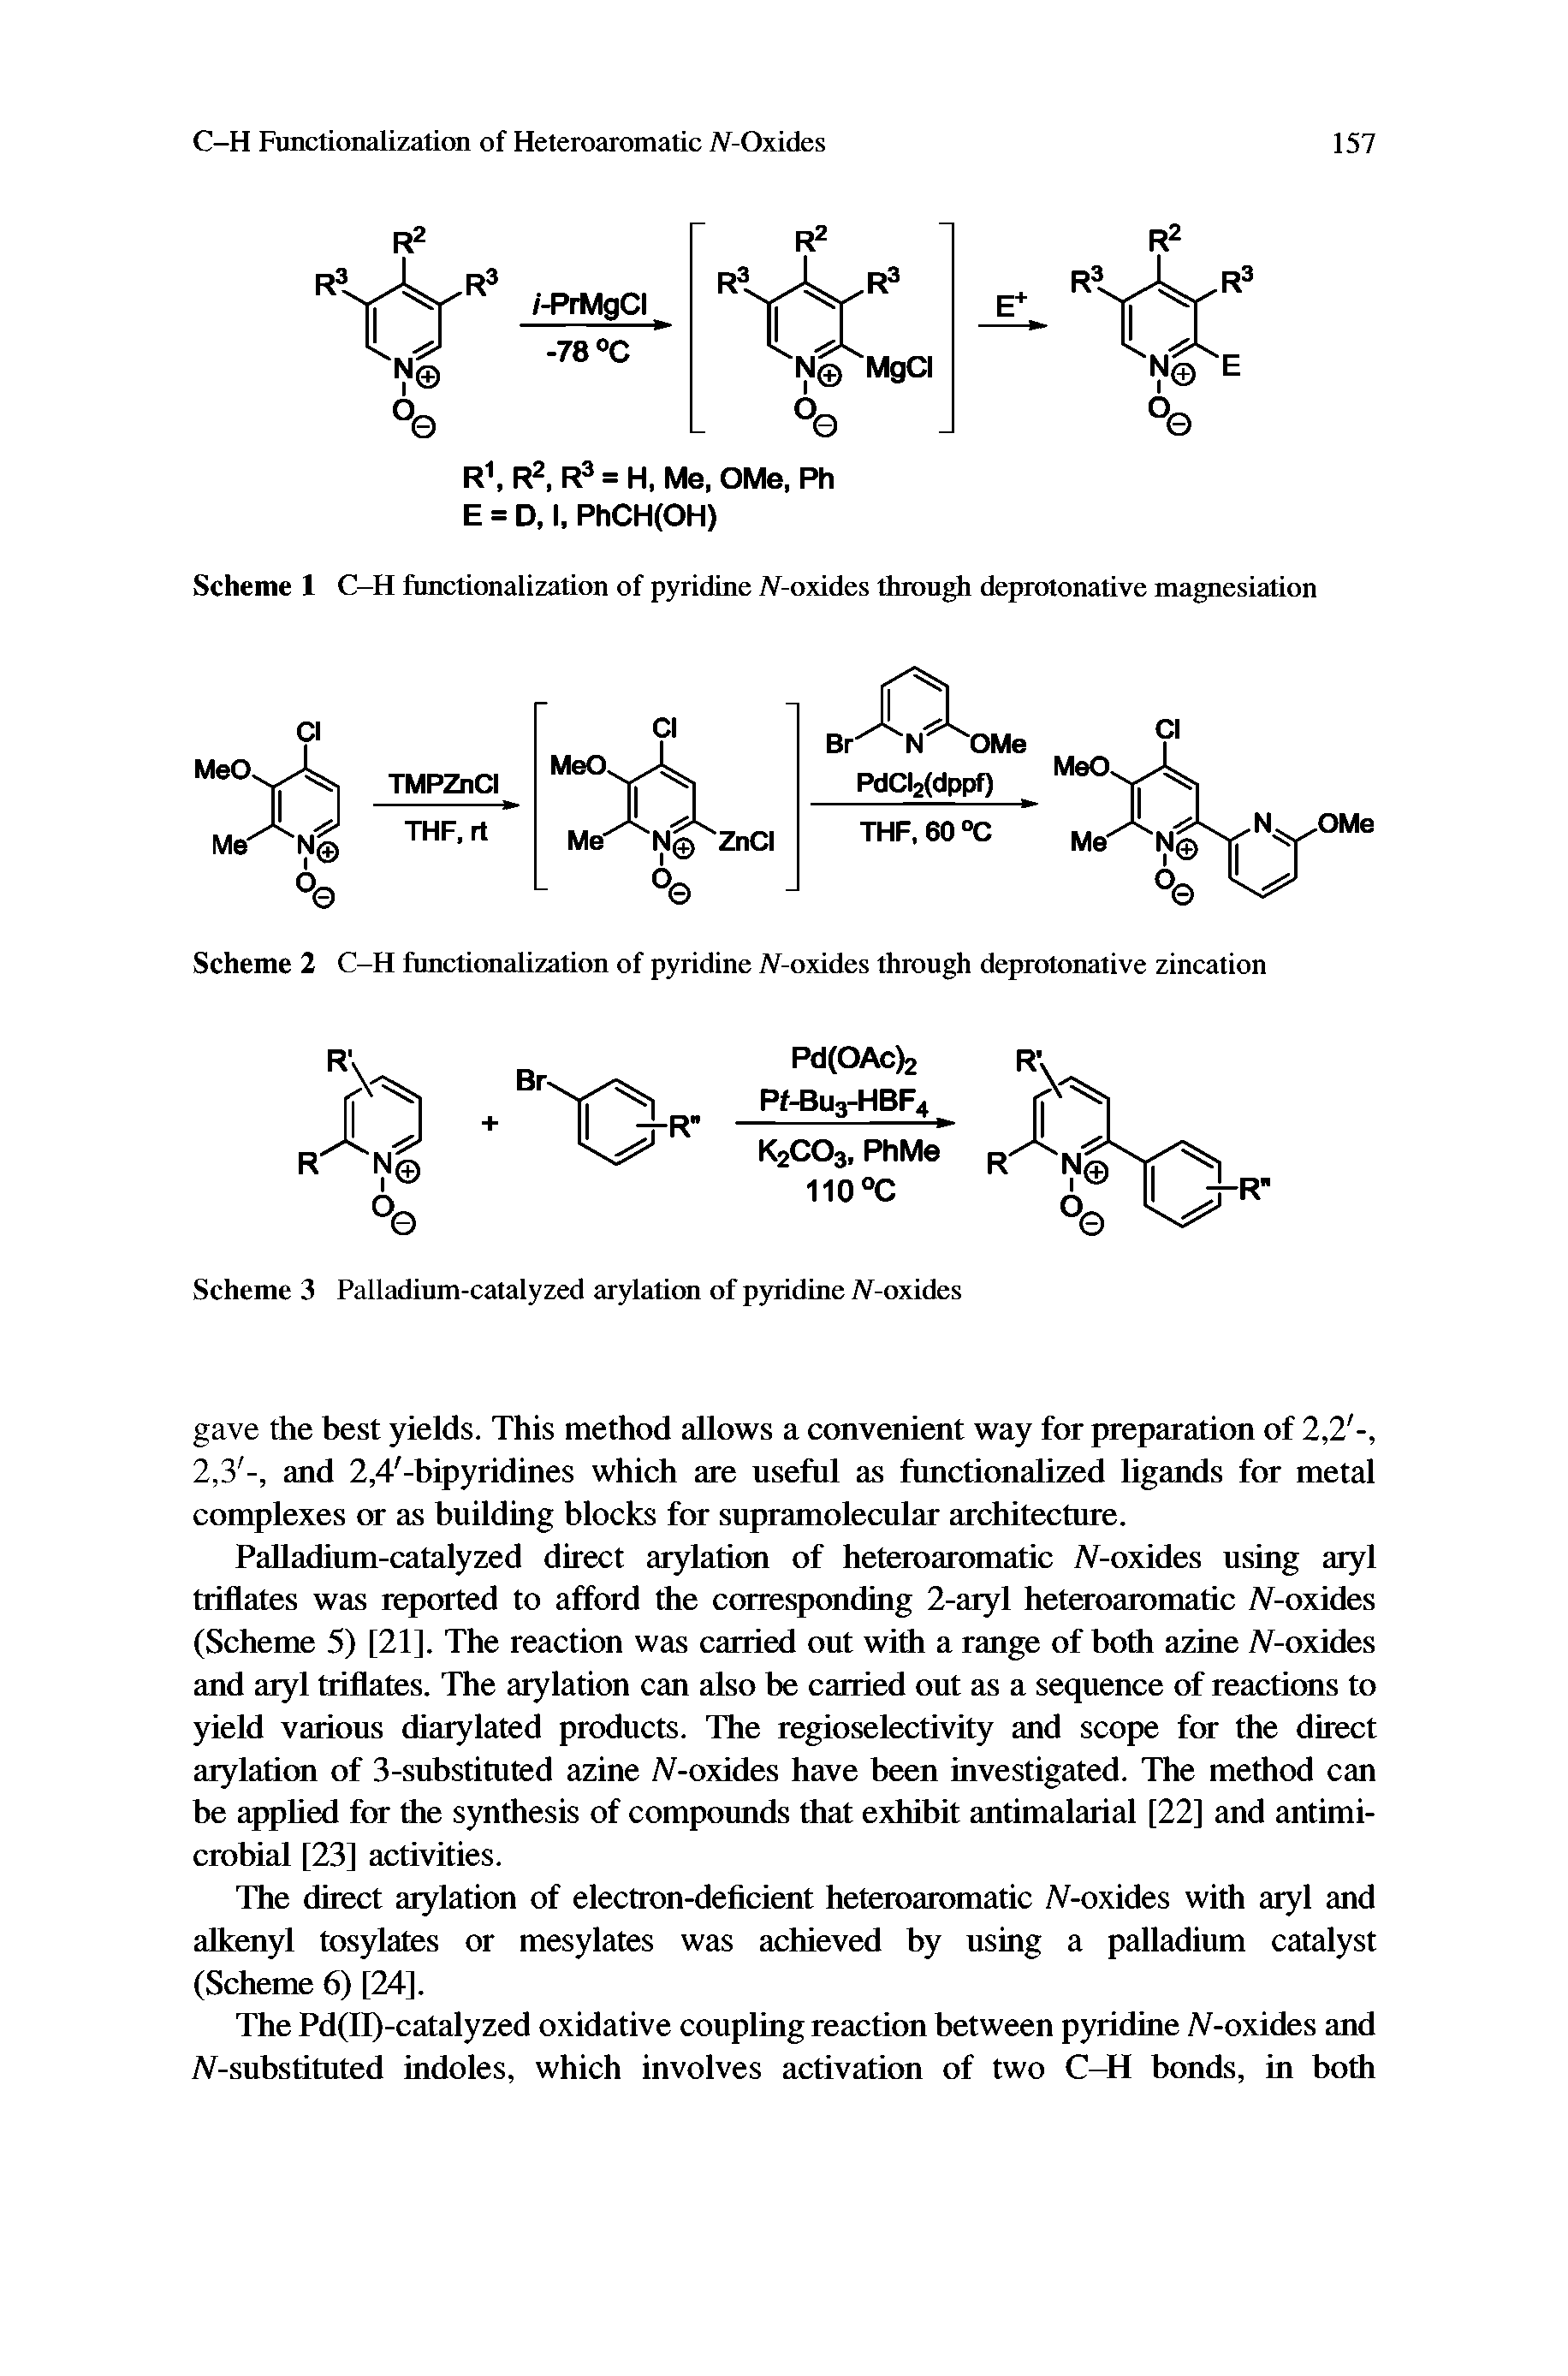 Scheme 2 C-H functionalization of pyridine iV-oxides through deprotonative zincation...